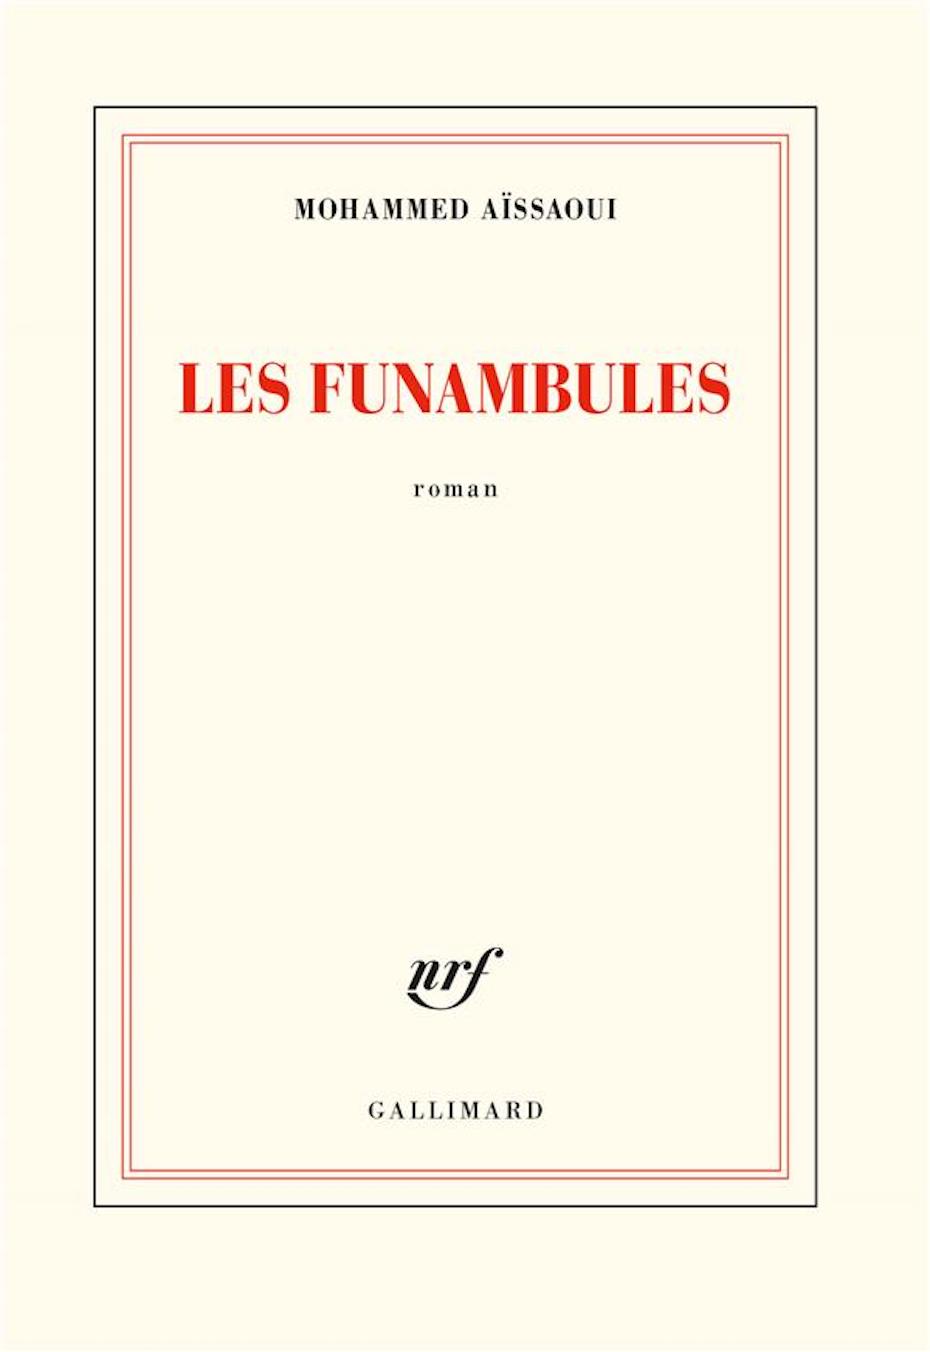 Mohammed Aïssaoui, Les funambules (Gallimard)